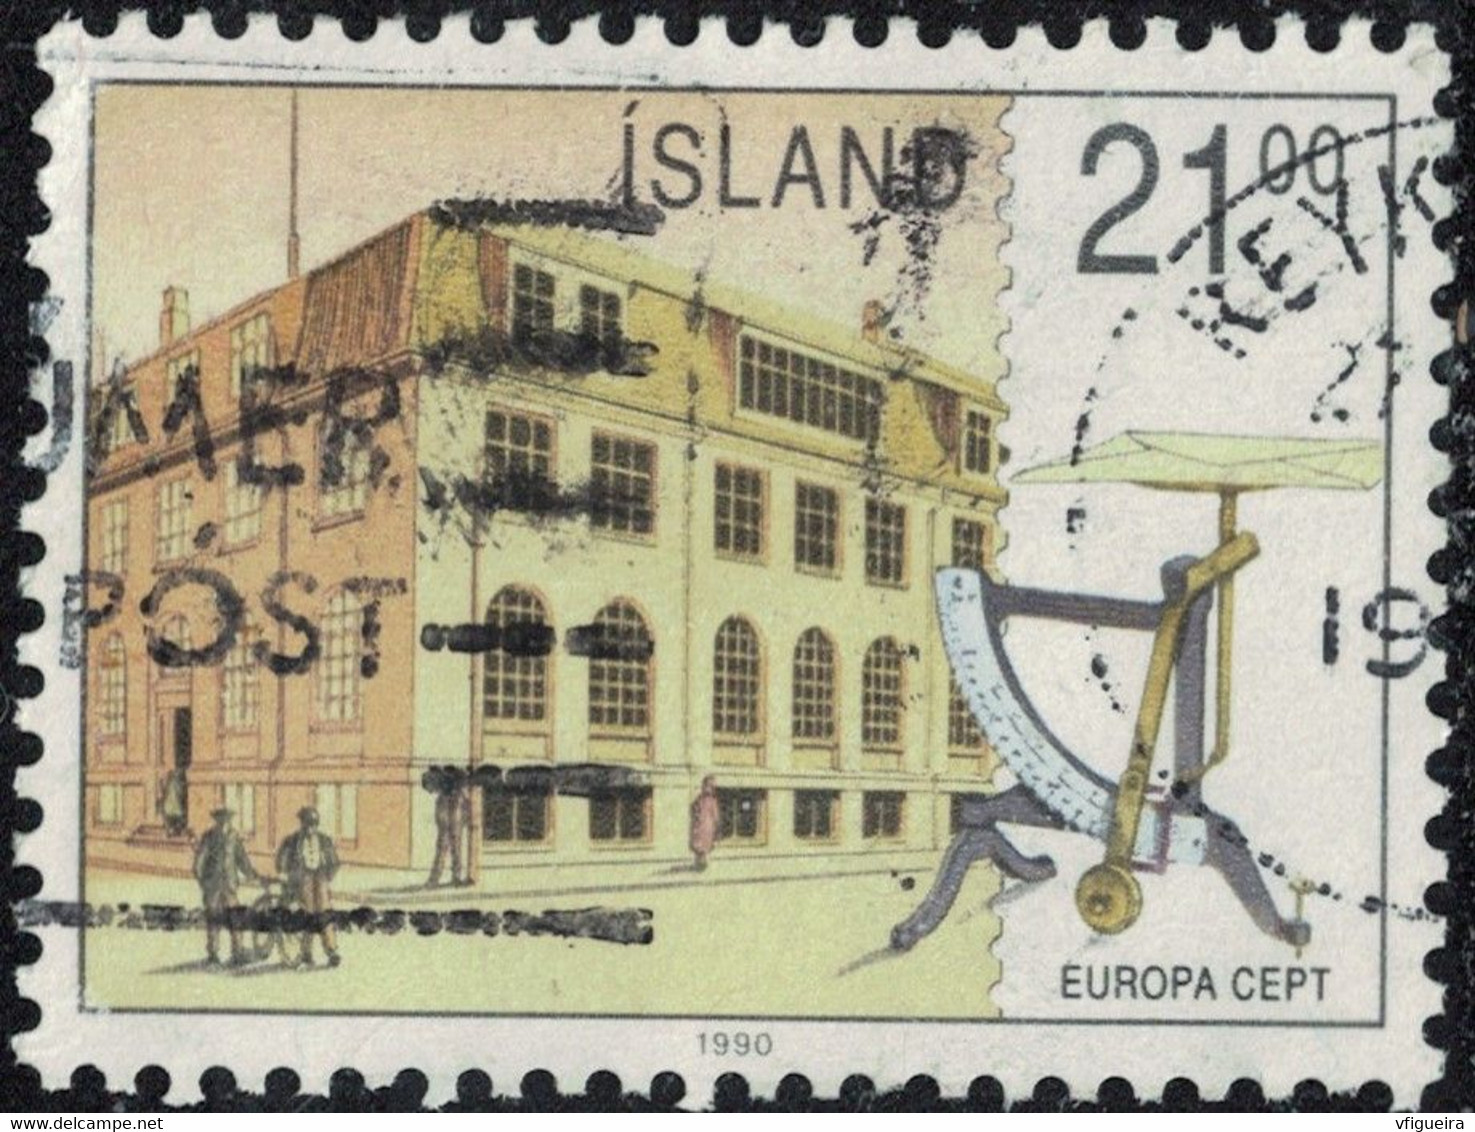 Islande 1990 Oblitéré Used Post Office Buildings Bâtiments Postaux Y&T IS 679 SU - Used Stamps